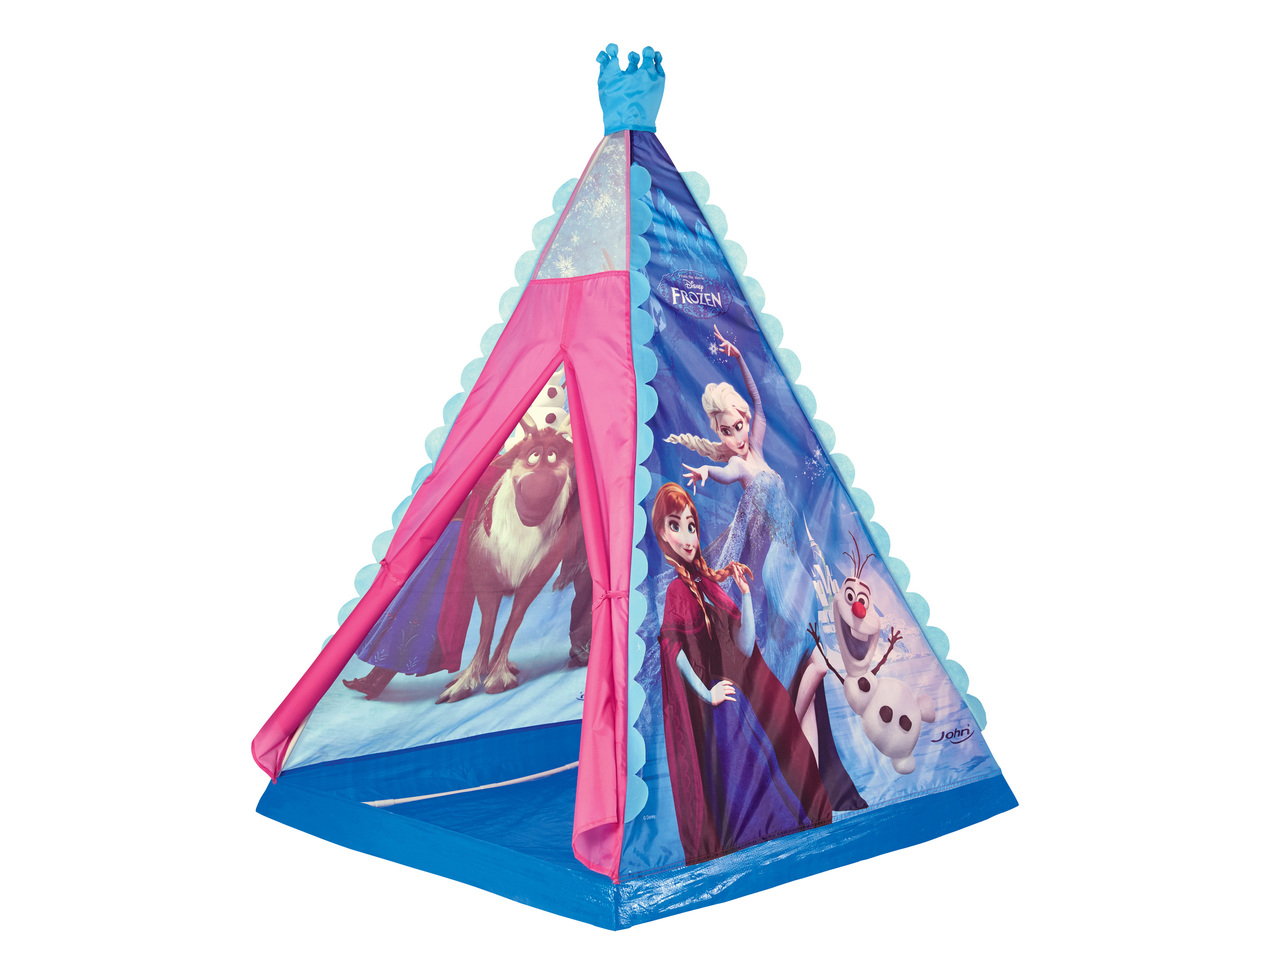 JOHN Kids' Character Tent